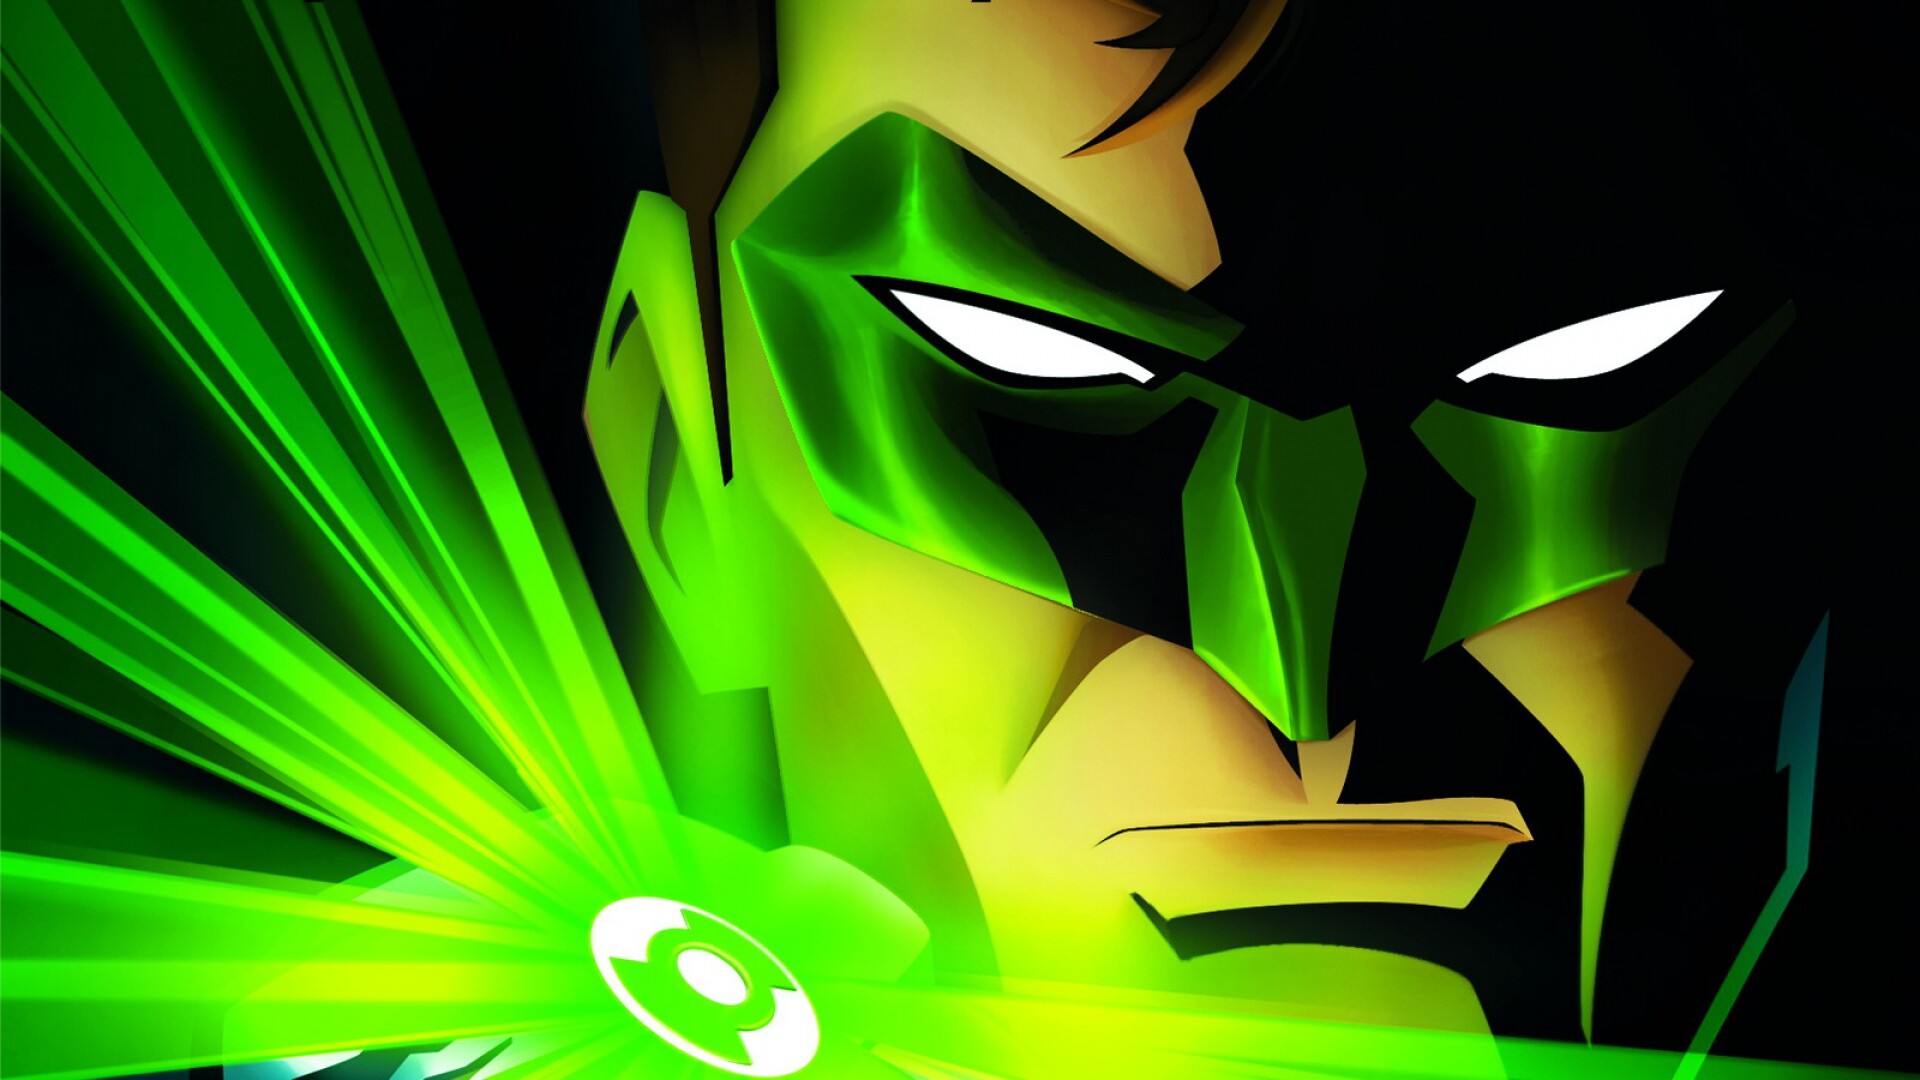 Green Lantern: Green Lantern DC Comics, Ring-wielding superheroes across the universe. 1920x1080 Full HD Wallpaper.